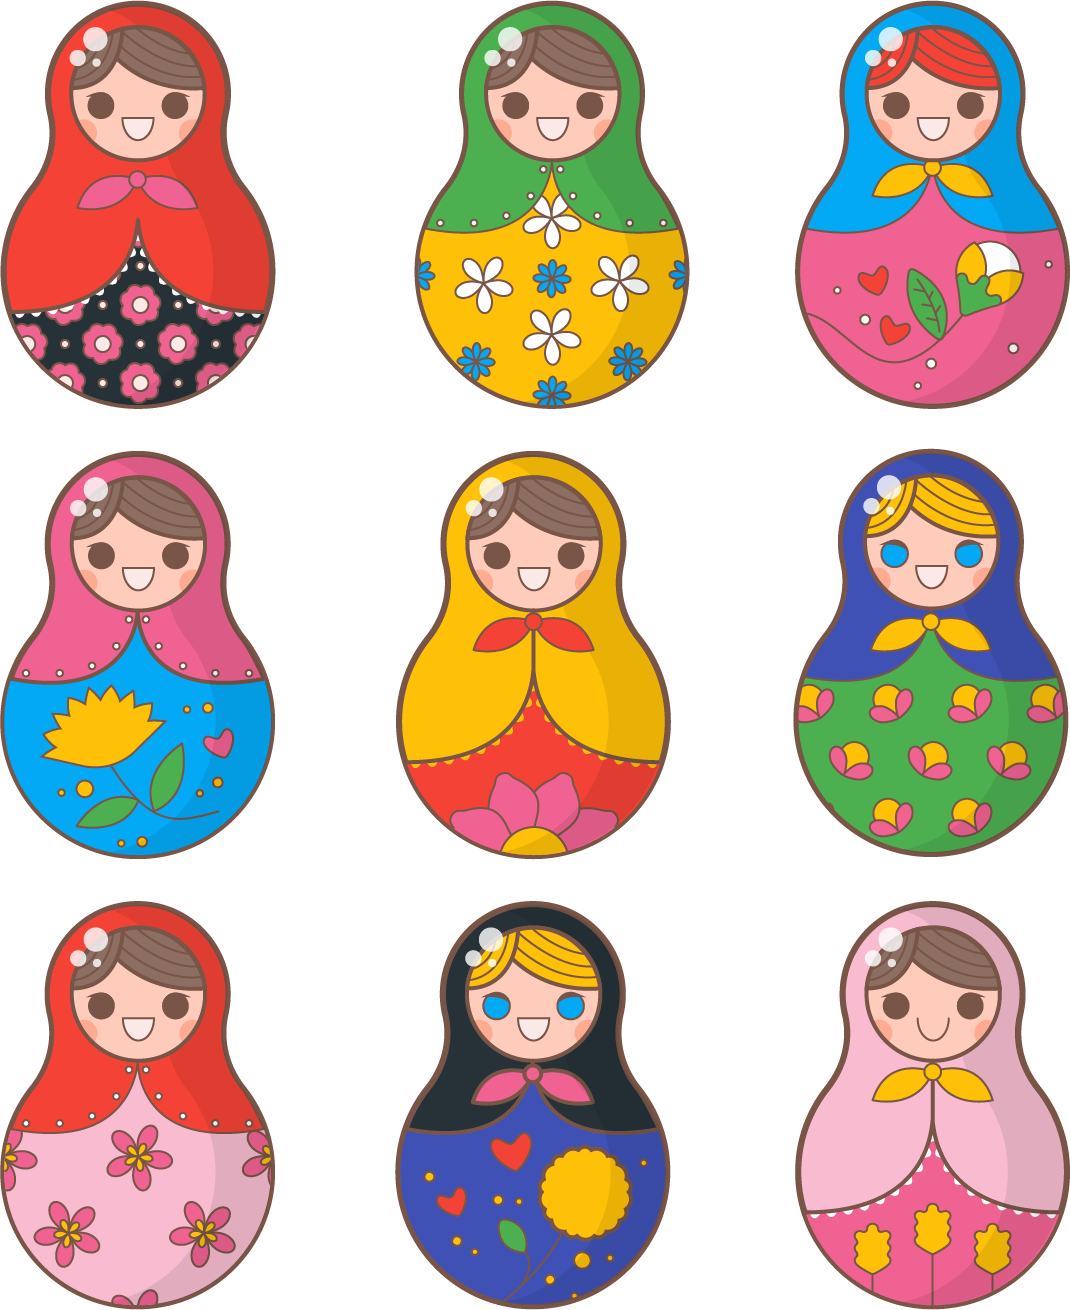 9 russian dolls.png